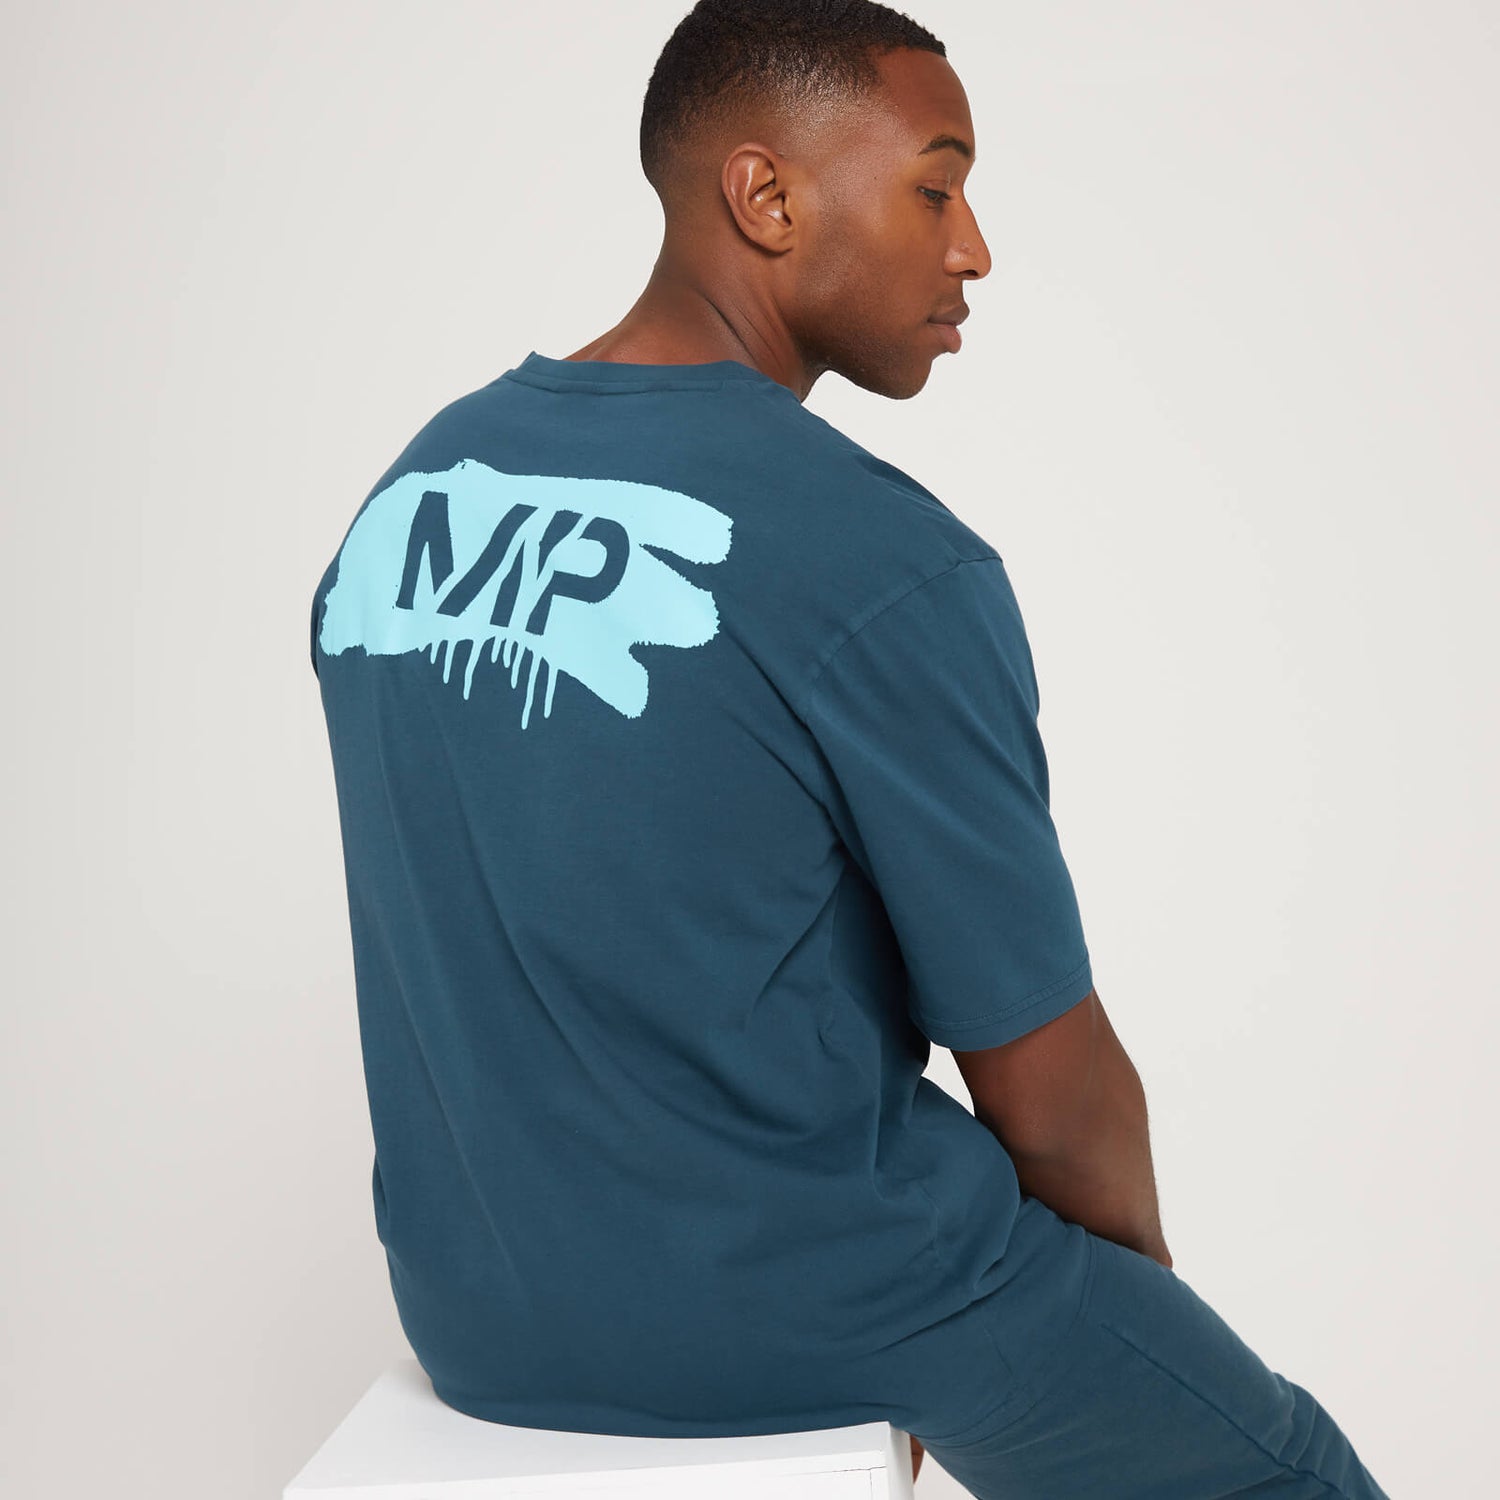 Camiseta extragrande de manga corta Adapt de efecto lavado para hombre de MP - Azul empolvado - XXS